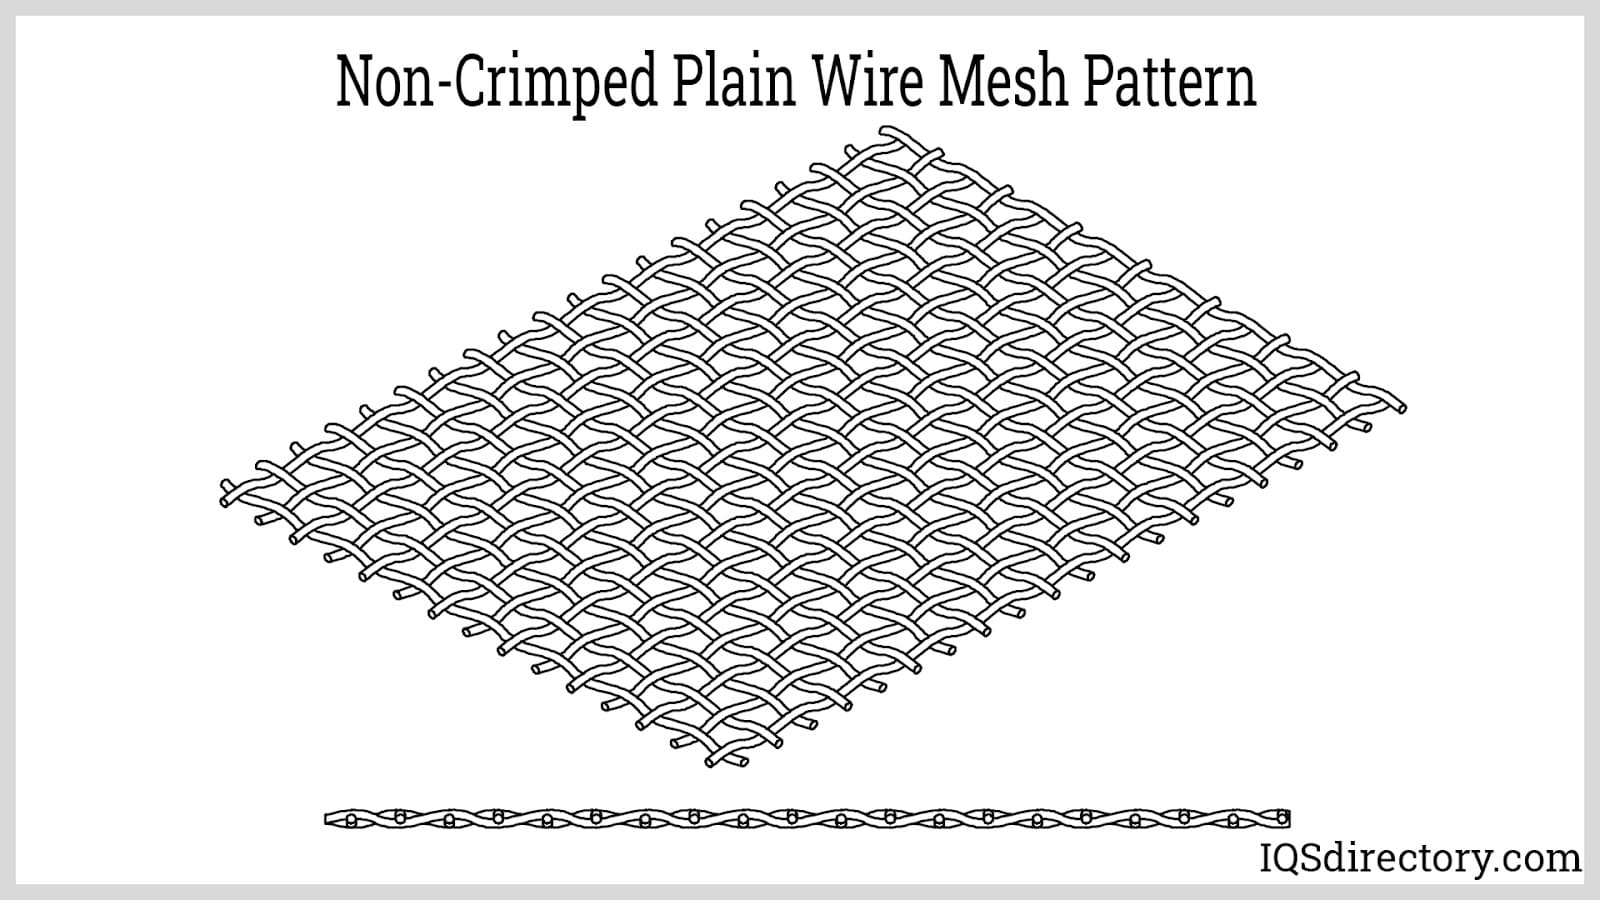 Basics of Wire Mesh